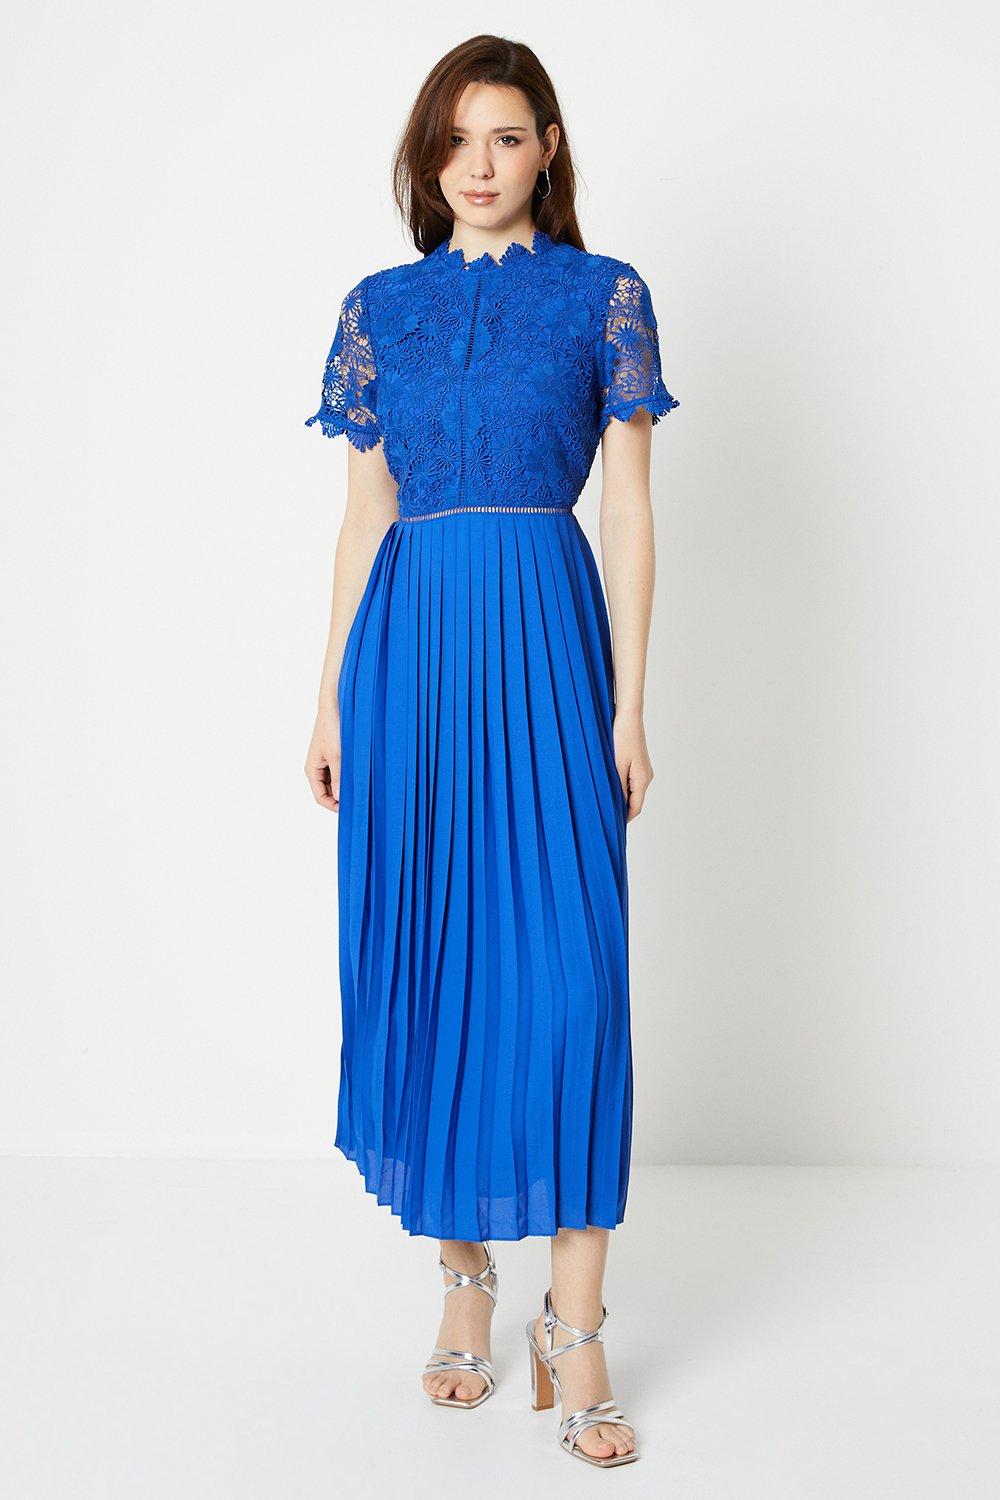 High Neck Floral Lace Bodice Pleat Dress - Blue